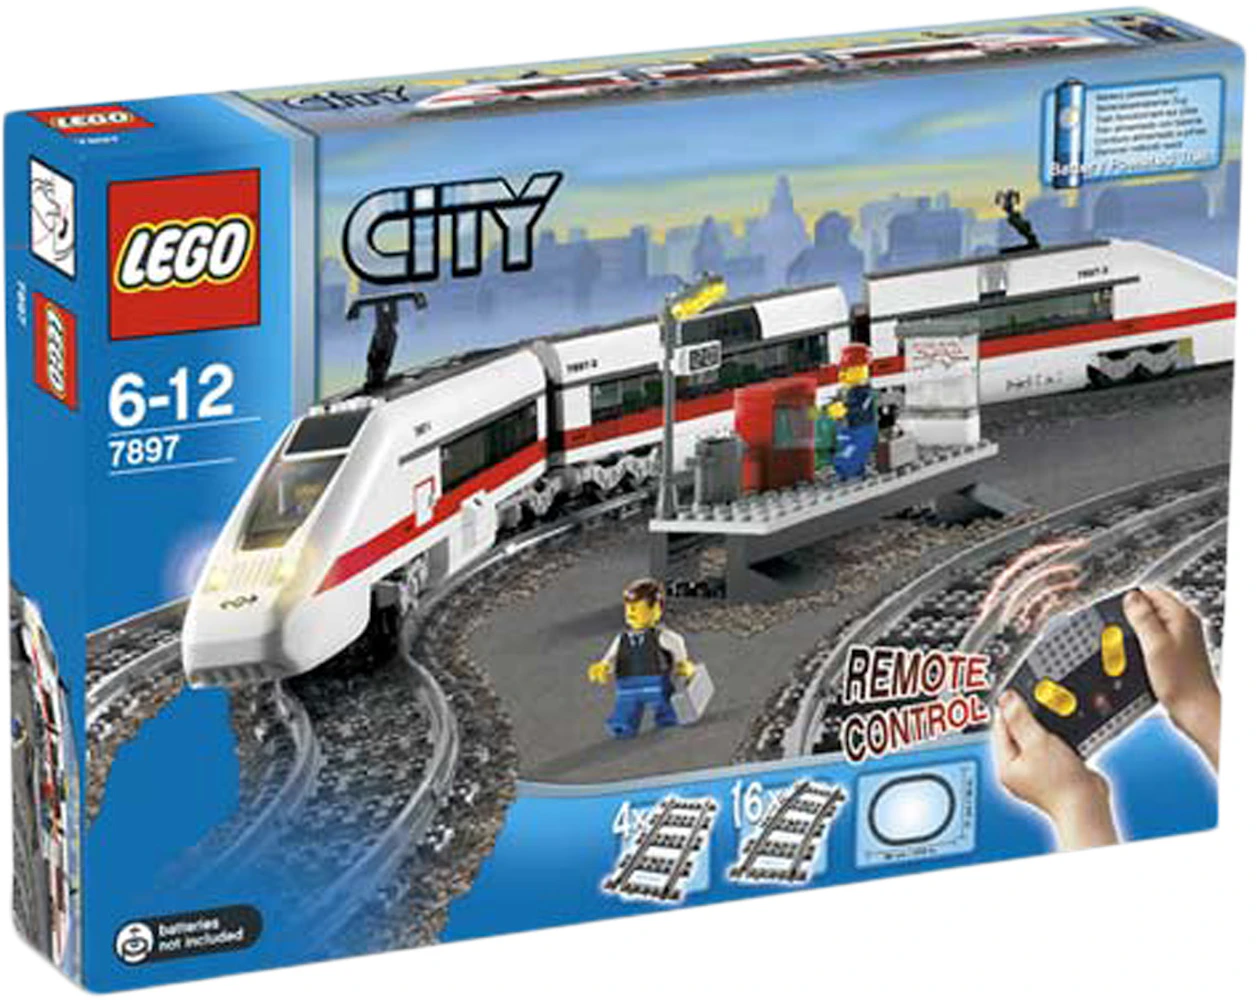 City Passenger Train Set 7897 - US